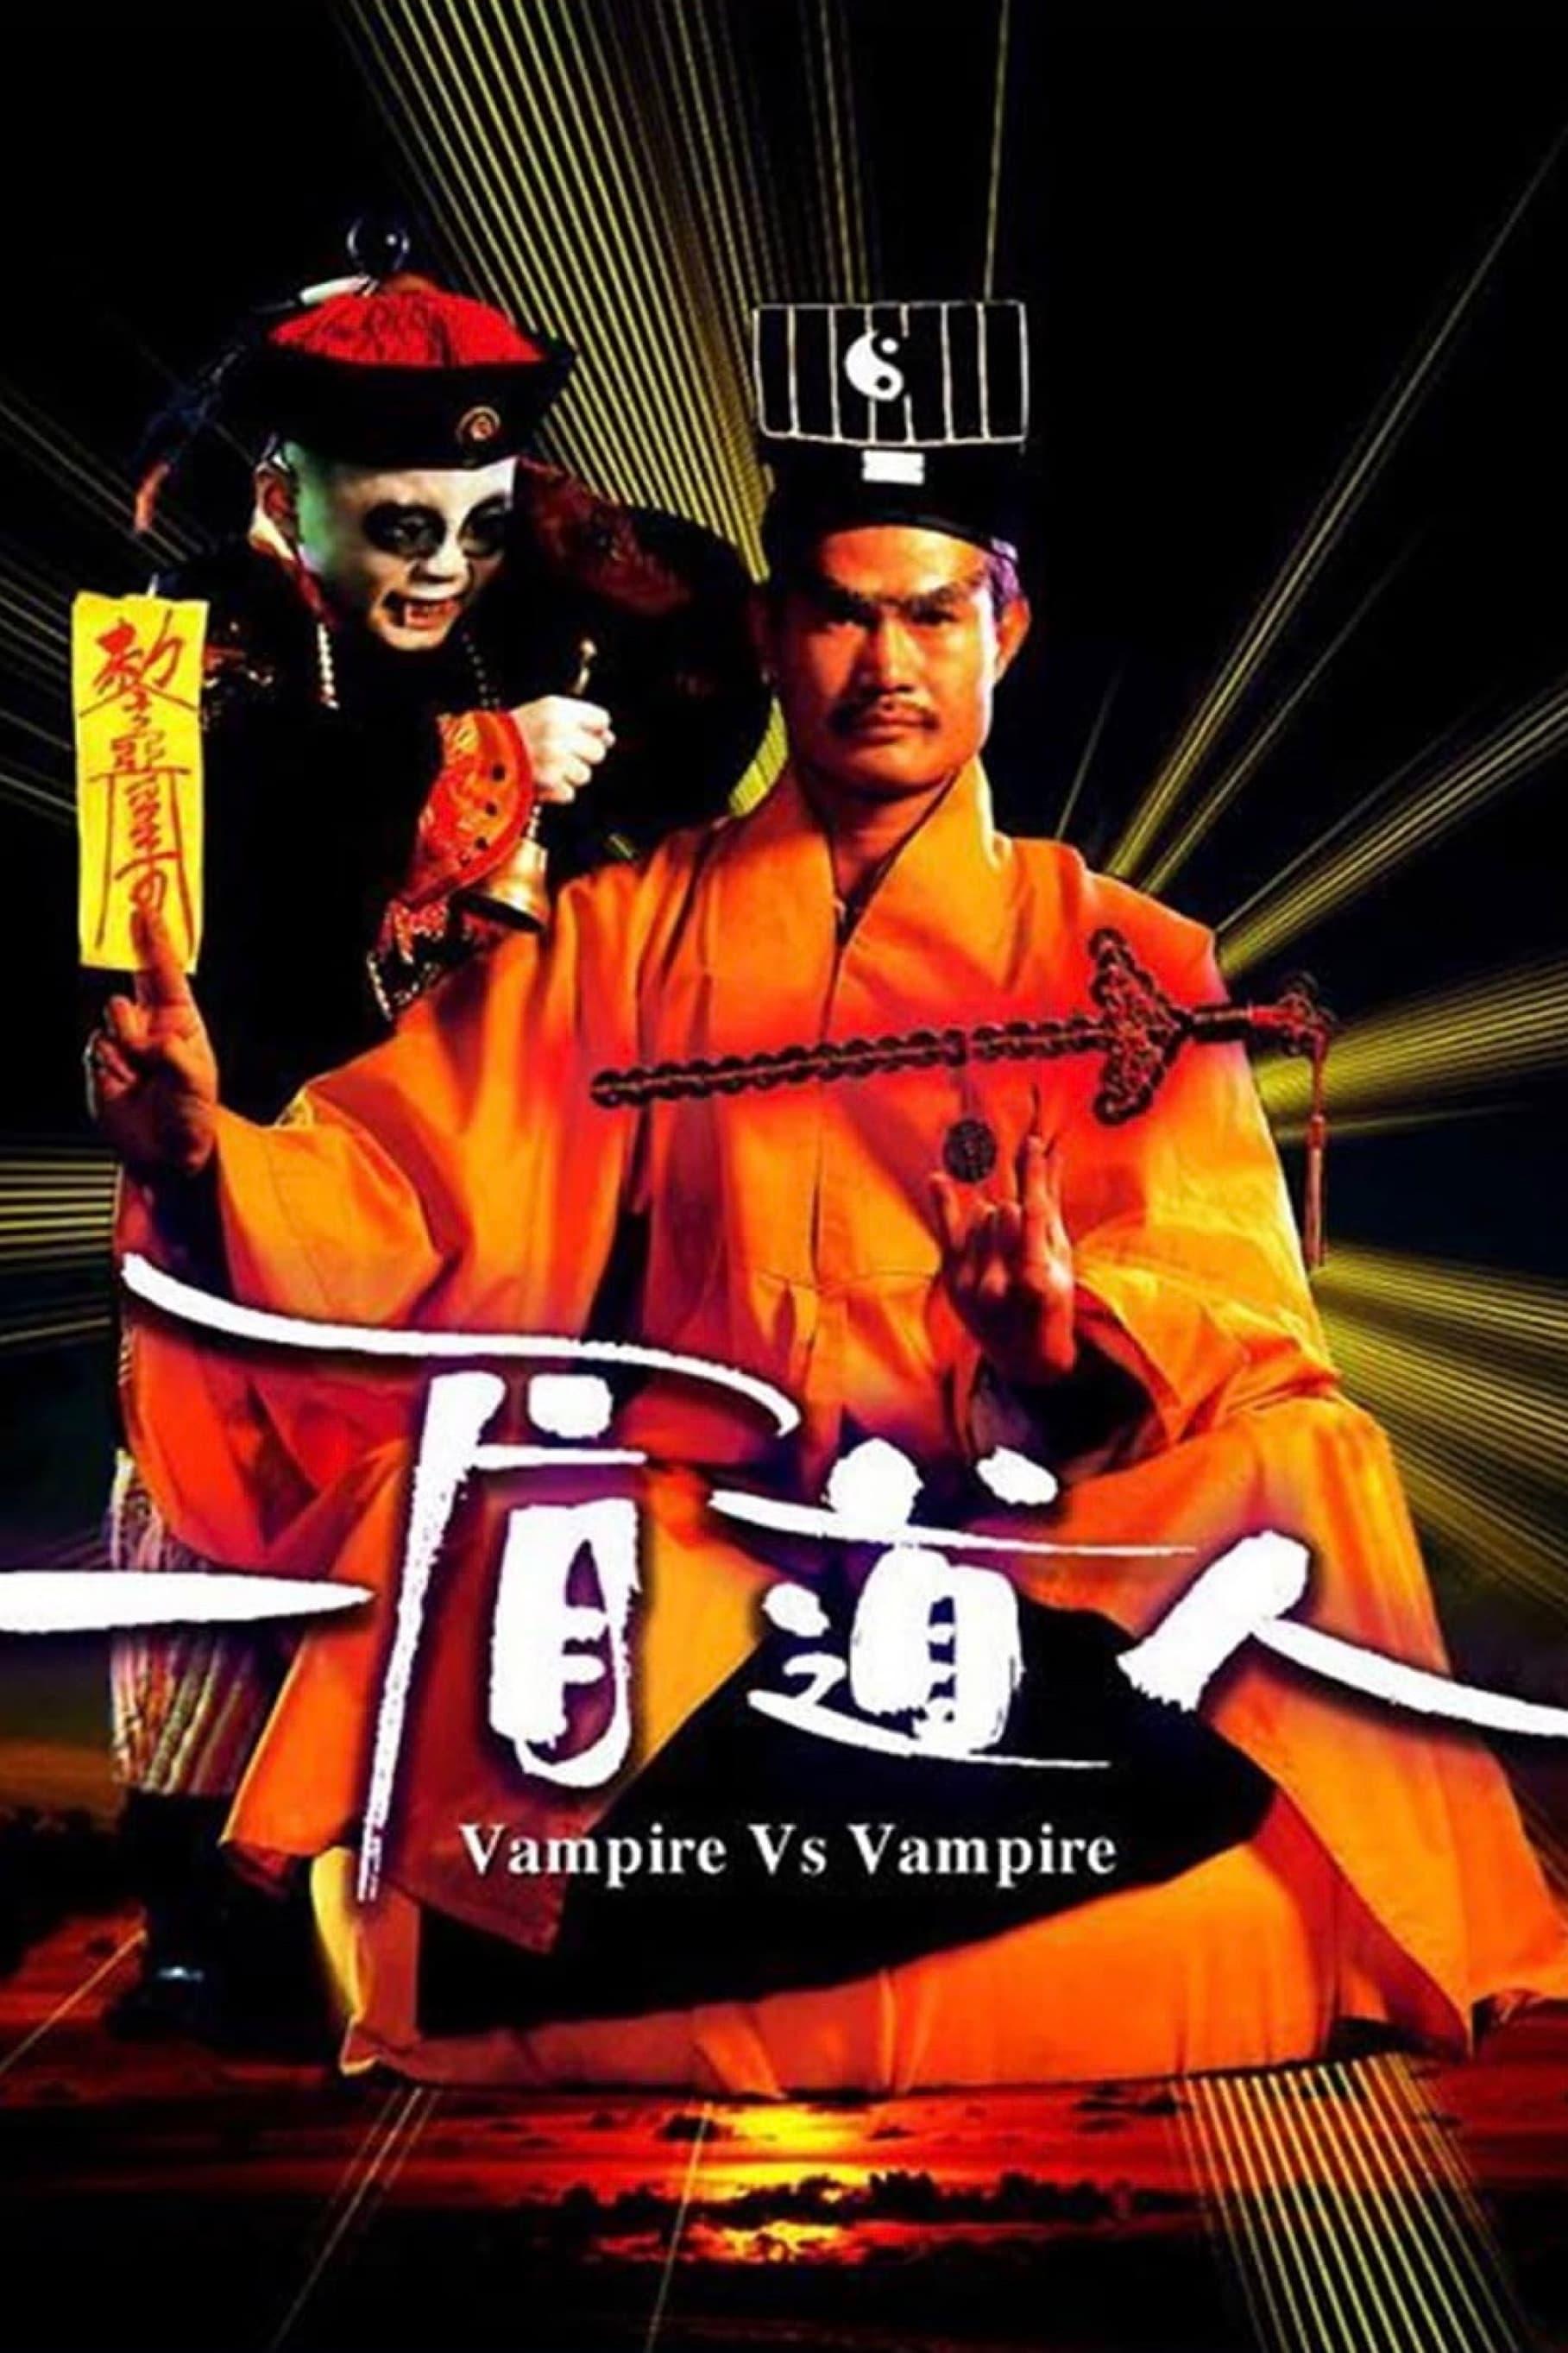 Vampire Vs. Vampire poster